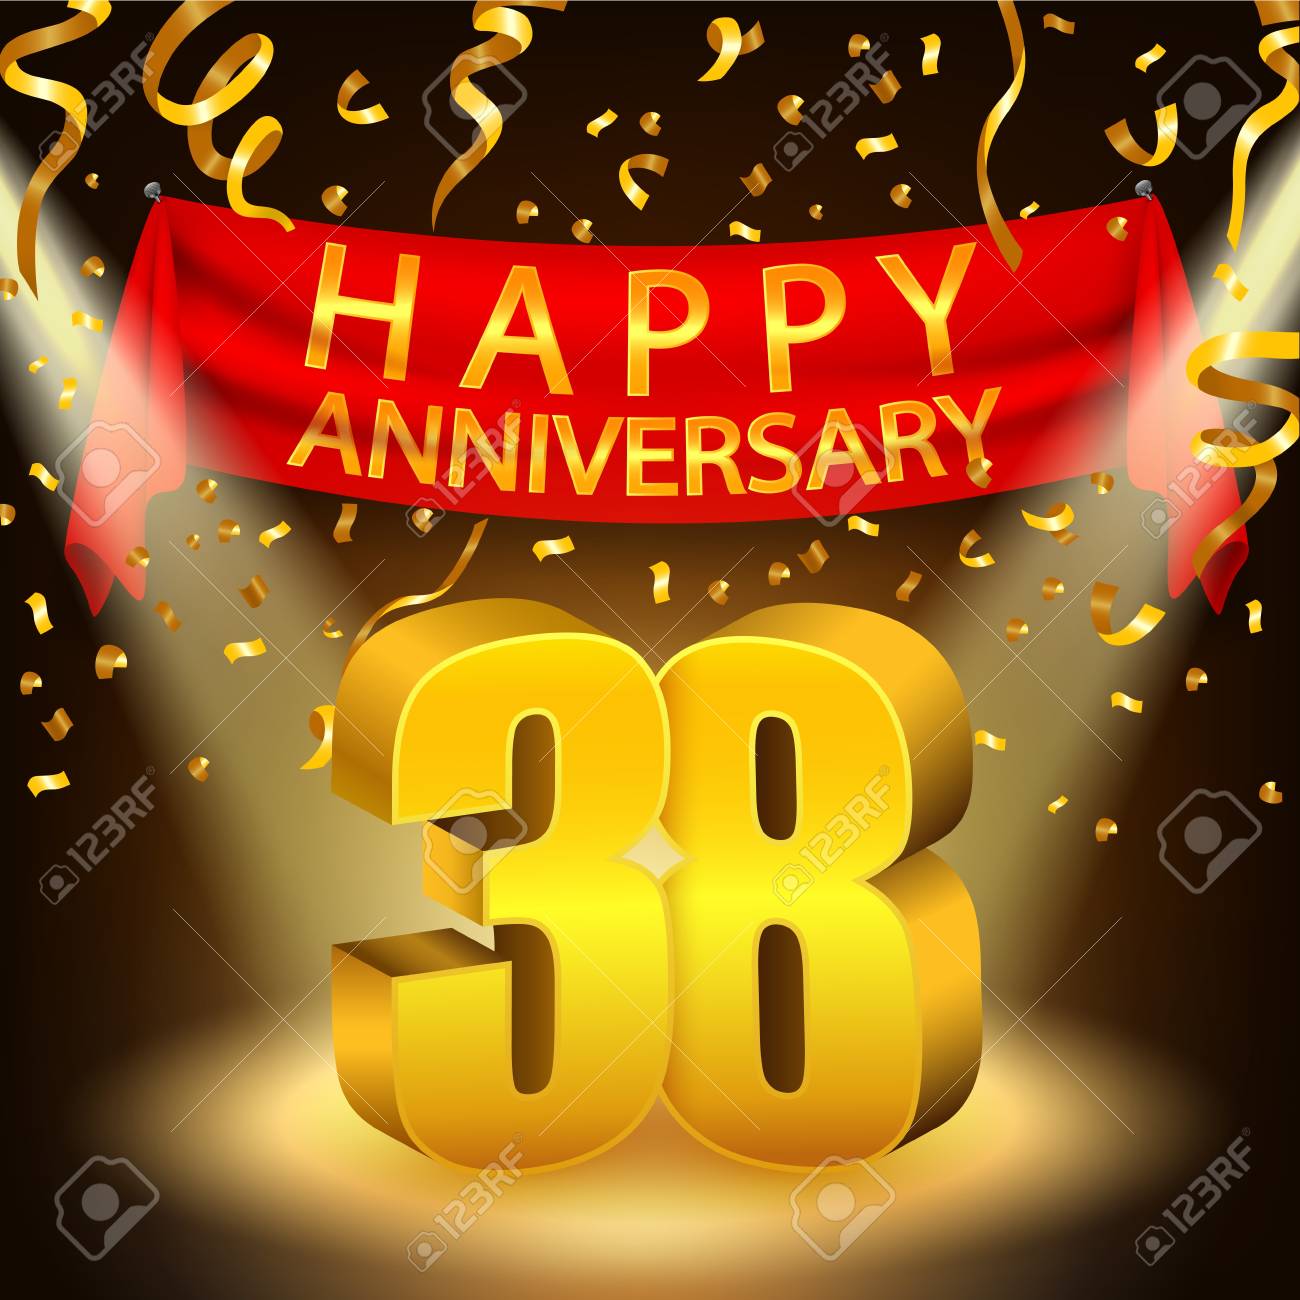 95437250-happy-38th-anniversary-celebration-with-golden-confetti-and-spotlight.jpg